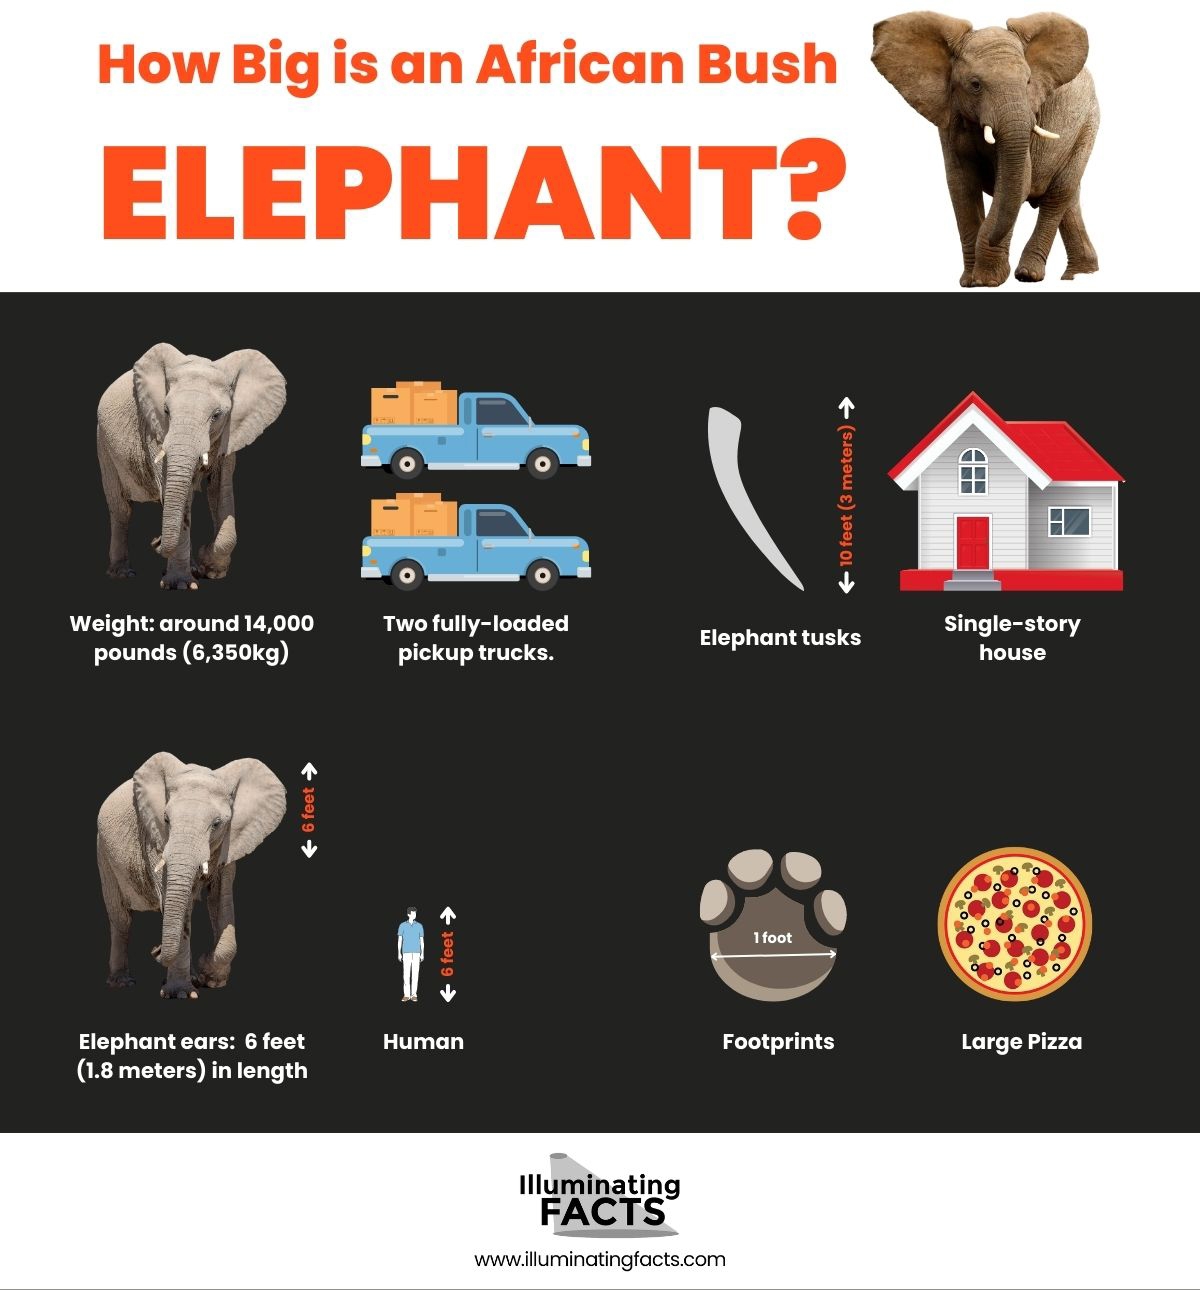 How Big is an African Bush Elephant?